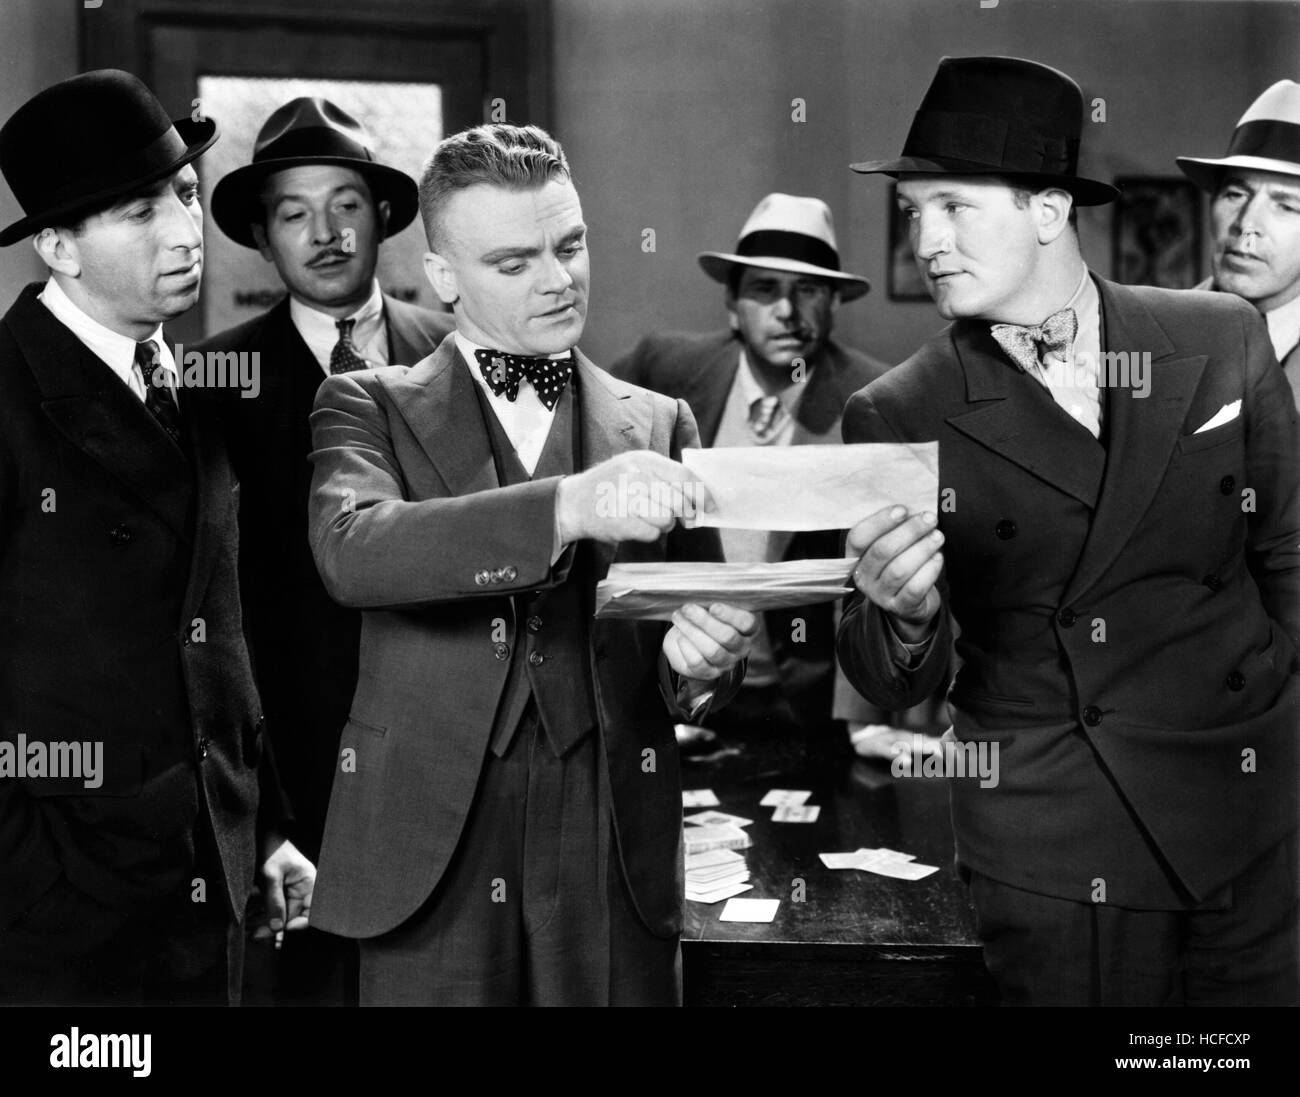 JIMMY THE GENT, James Cagney, Joe Sawyer, 1934 Stock Photo - Alamy